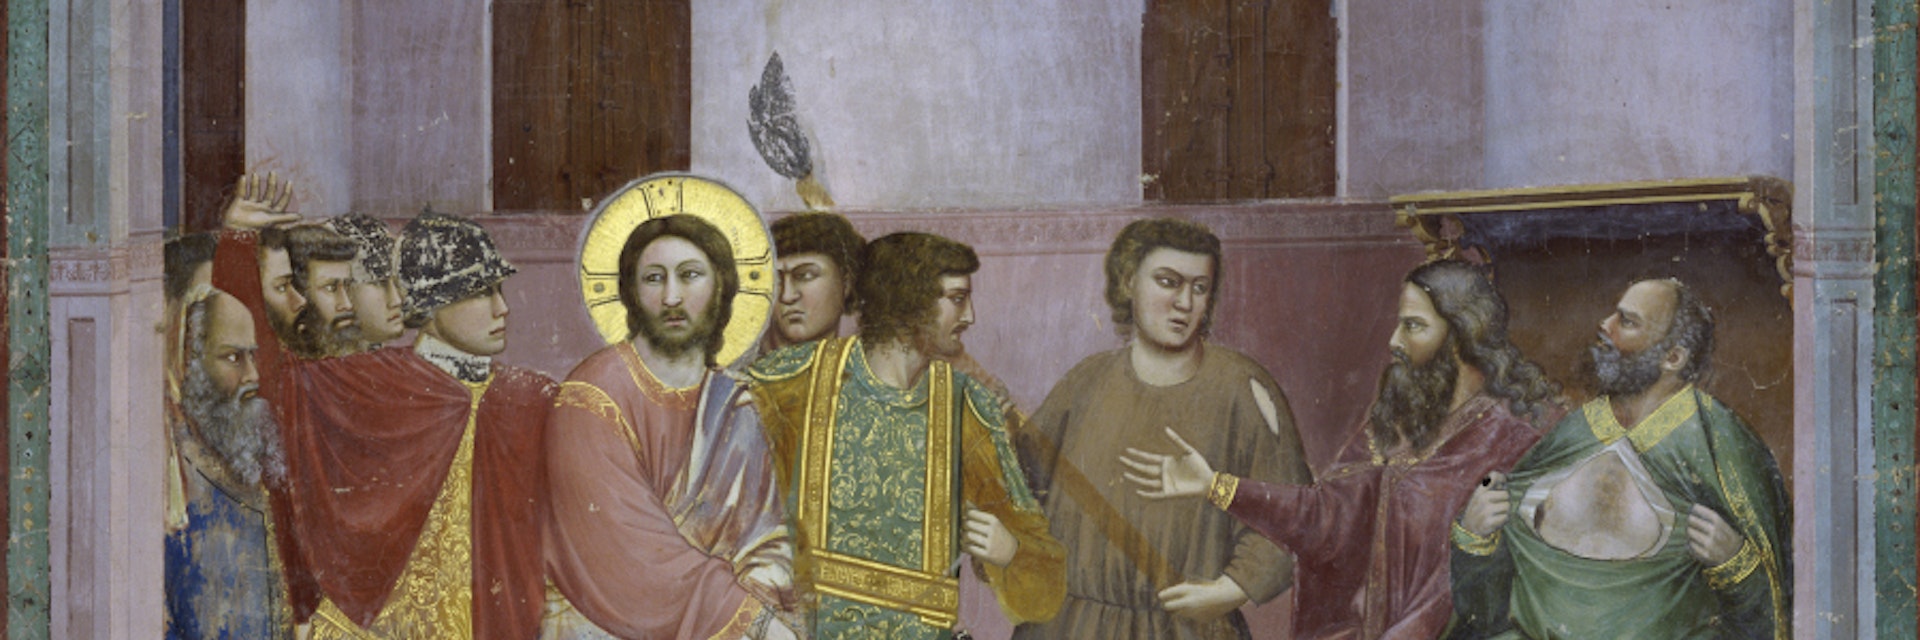 Jesus Before Caiaphas by Italian Artist Giotto di Bondone, fresco